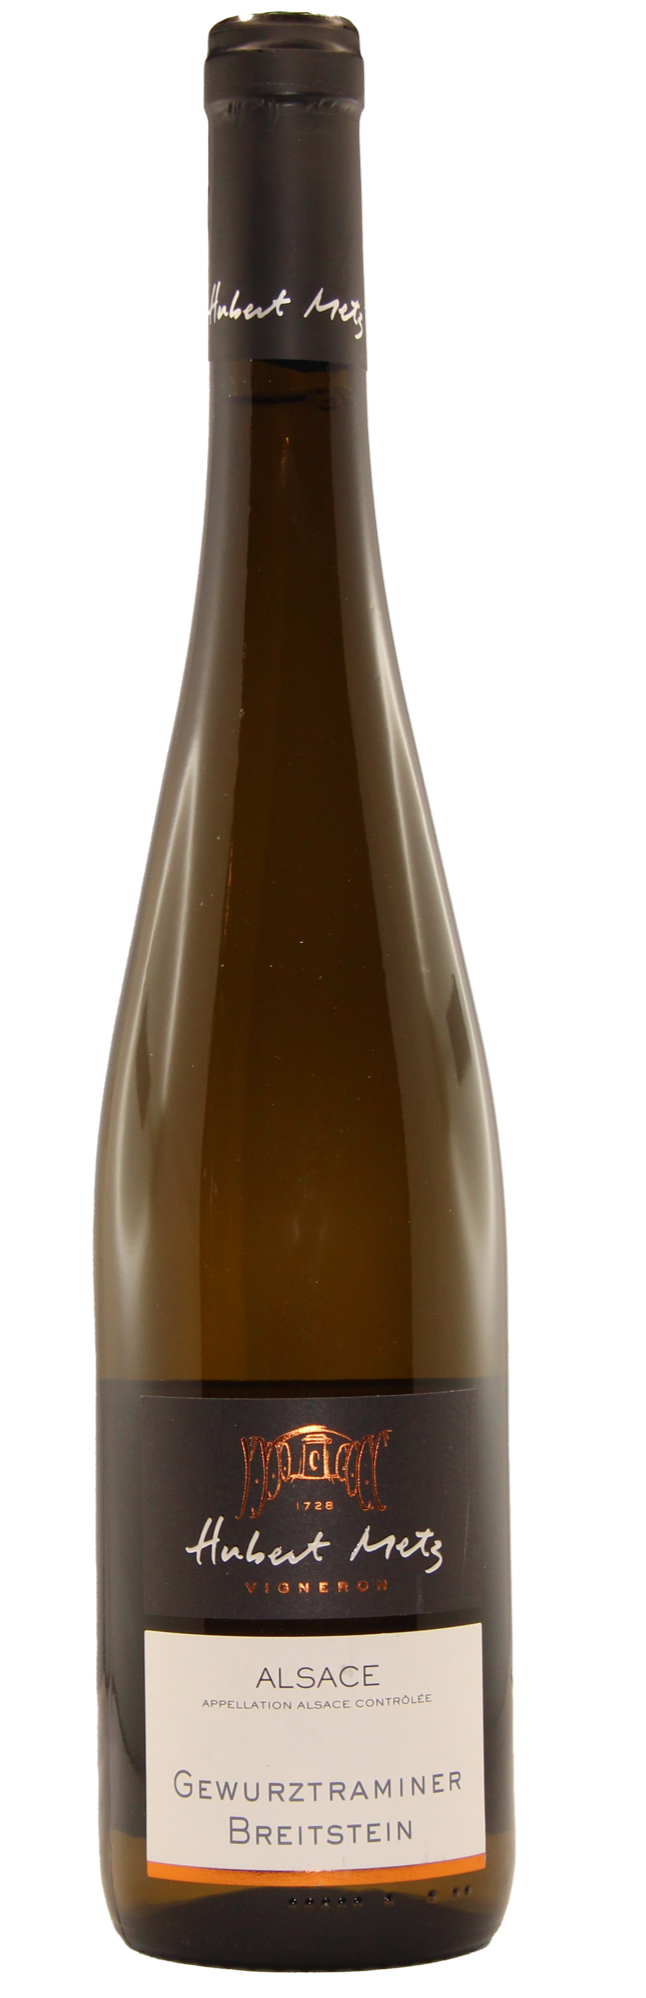 Gewurztraminer Breitstein 2016 Domaine Hubert Metz, lalsace-en-bouteille